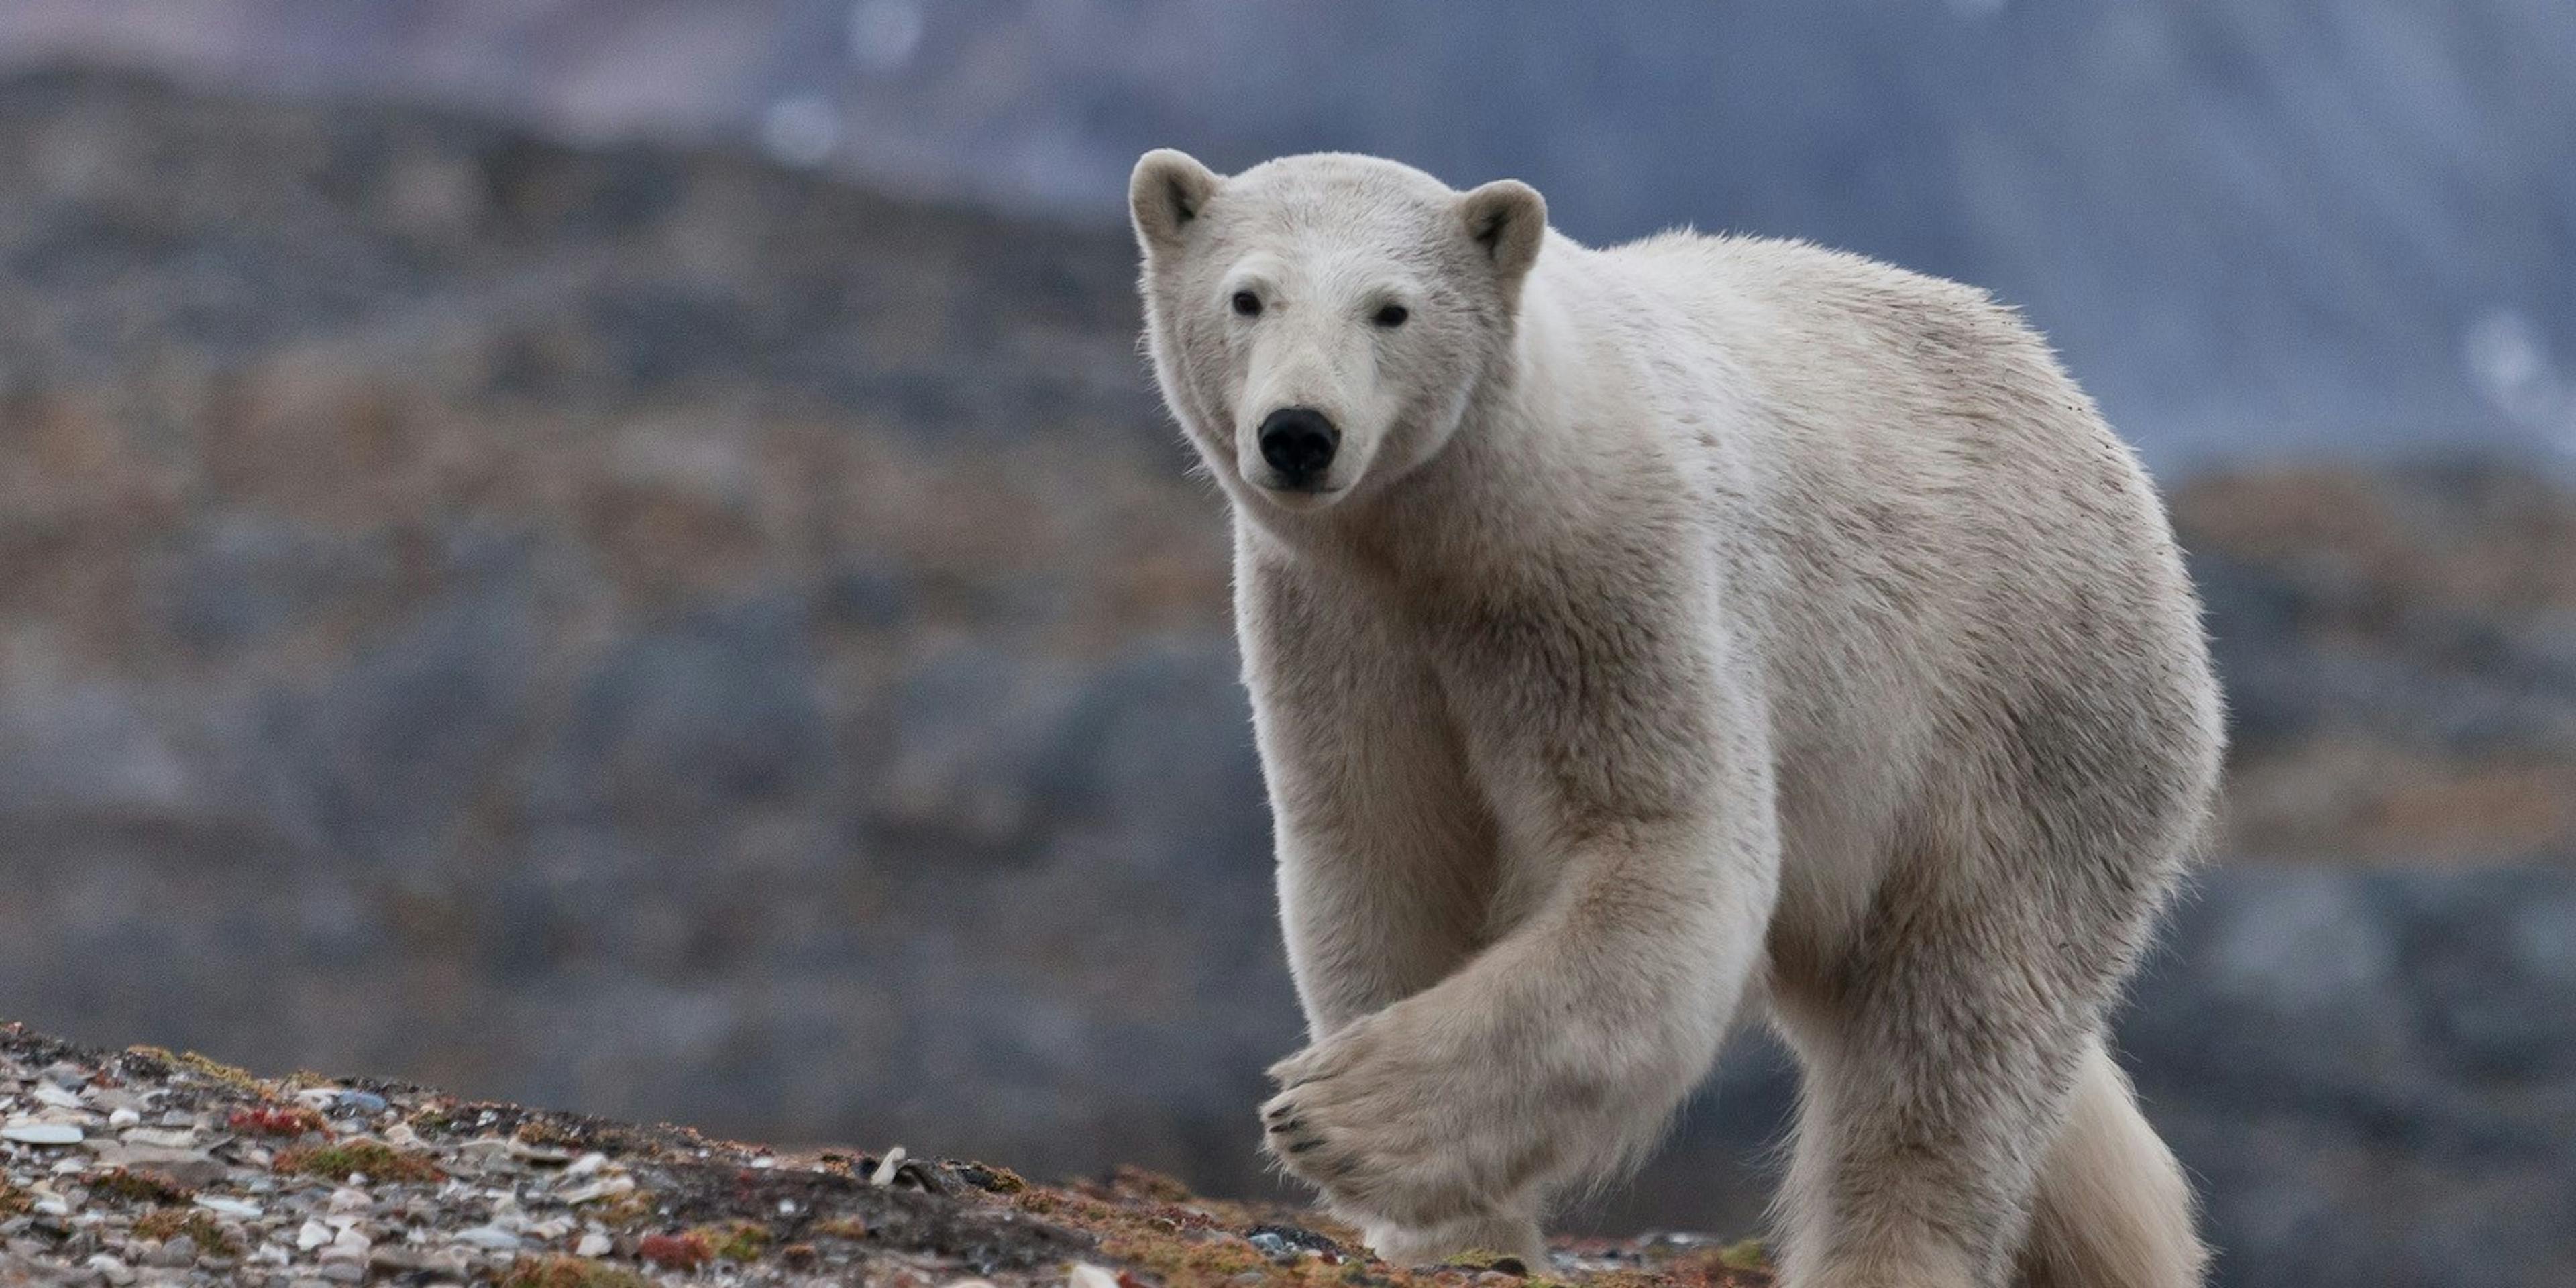 Polar Bears in Iceland, Wildlife in Iceland